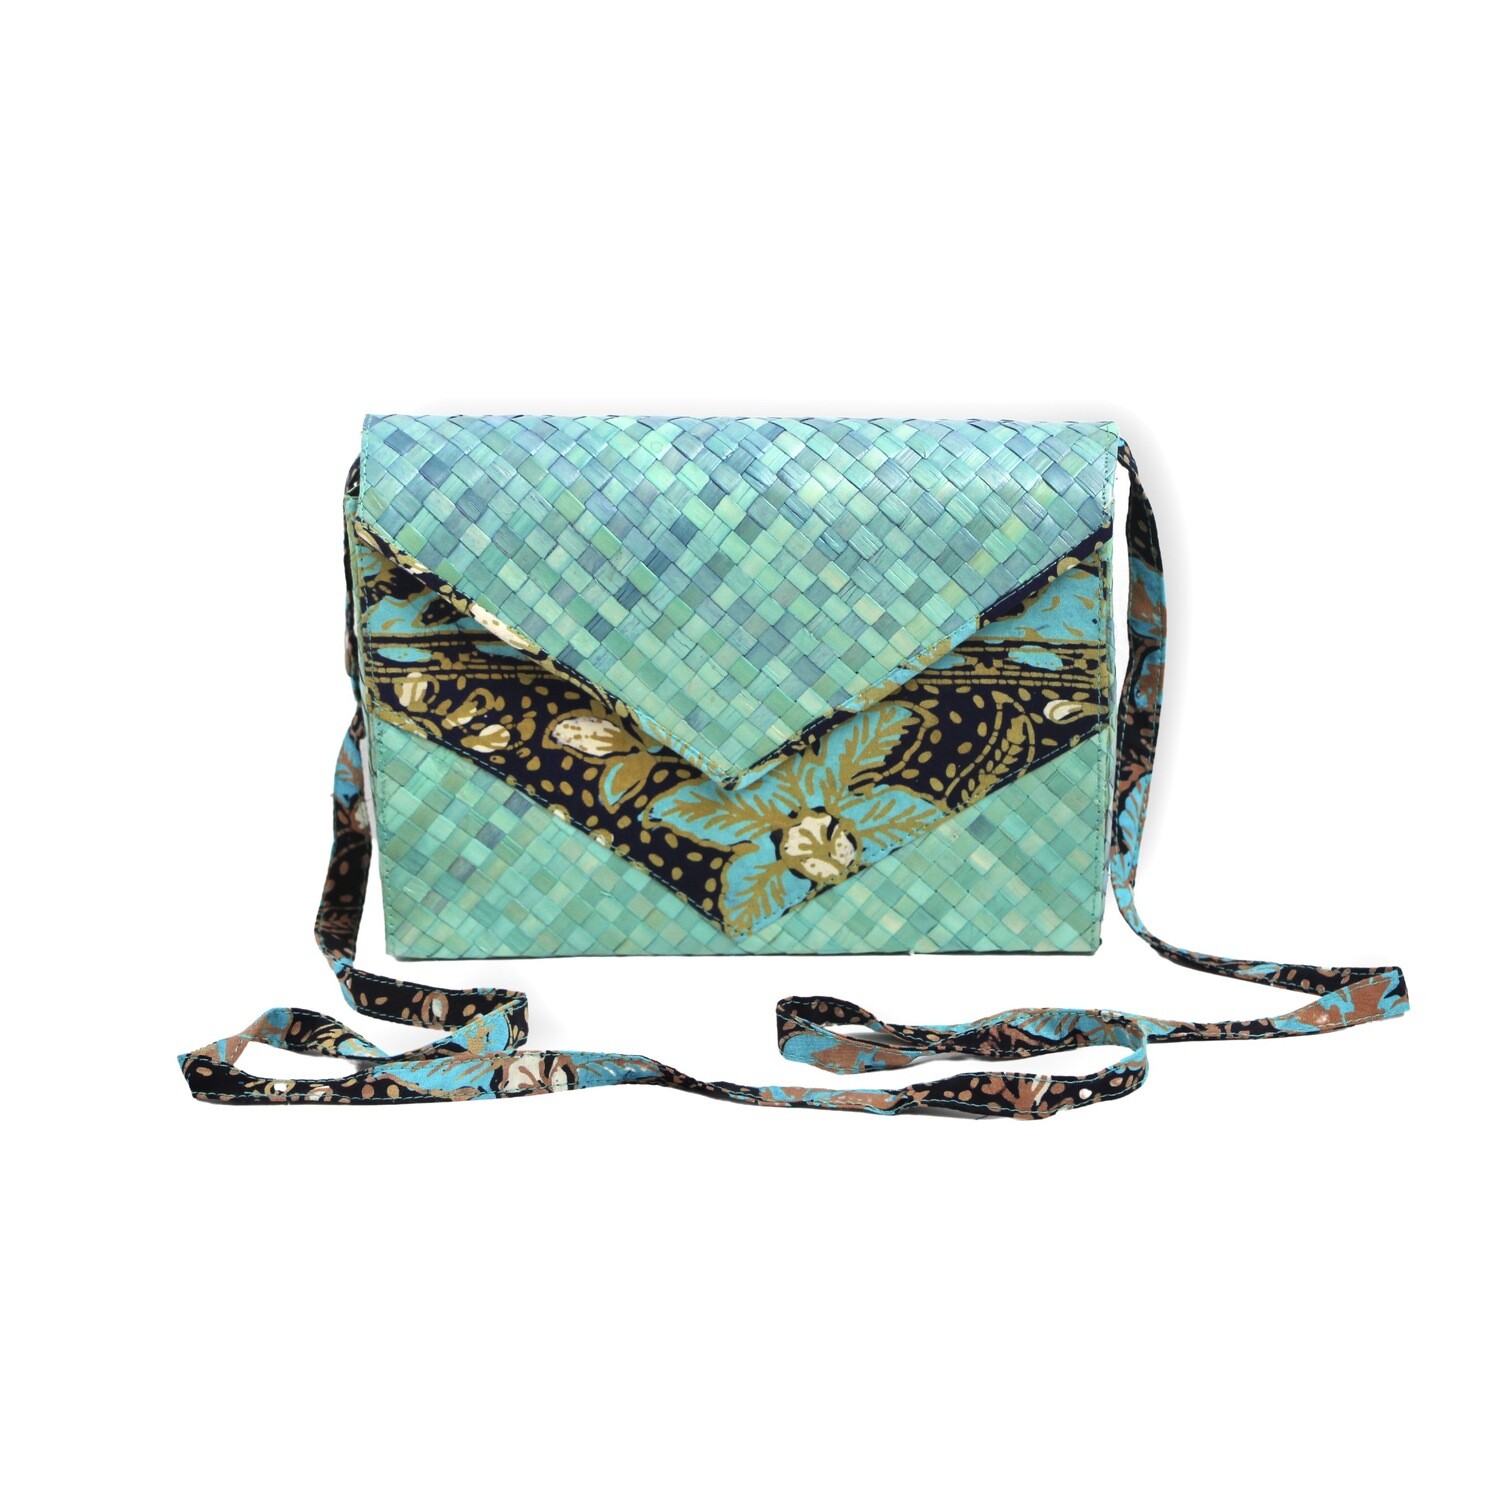 Mengkuang Sling Bag - Turquoise